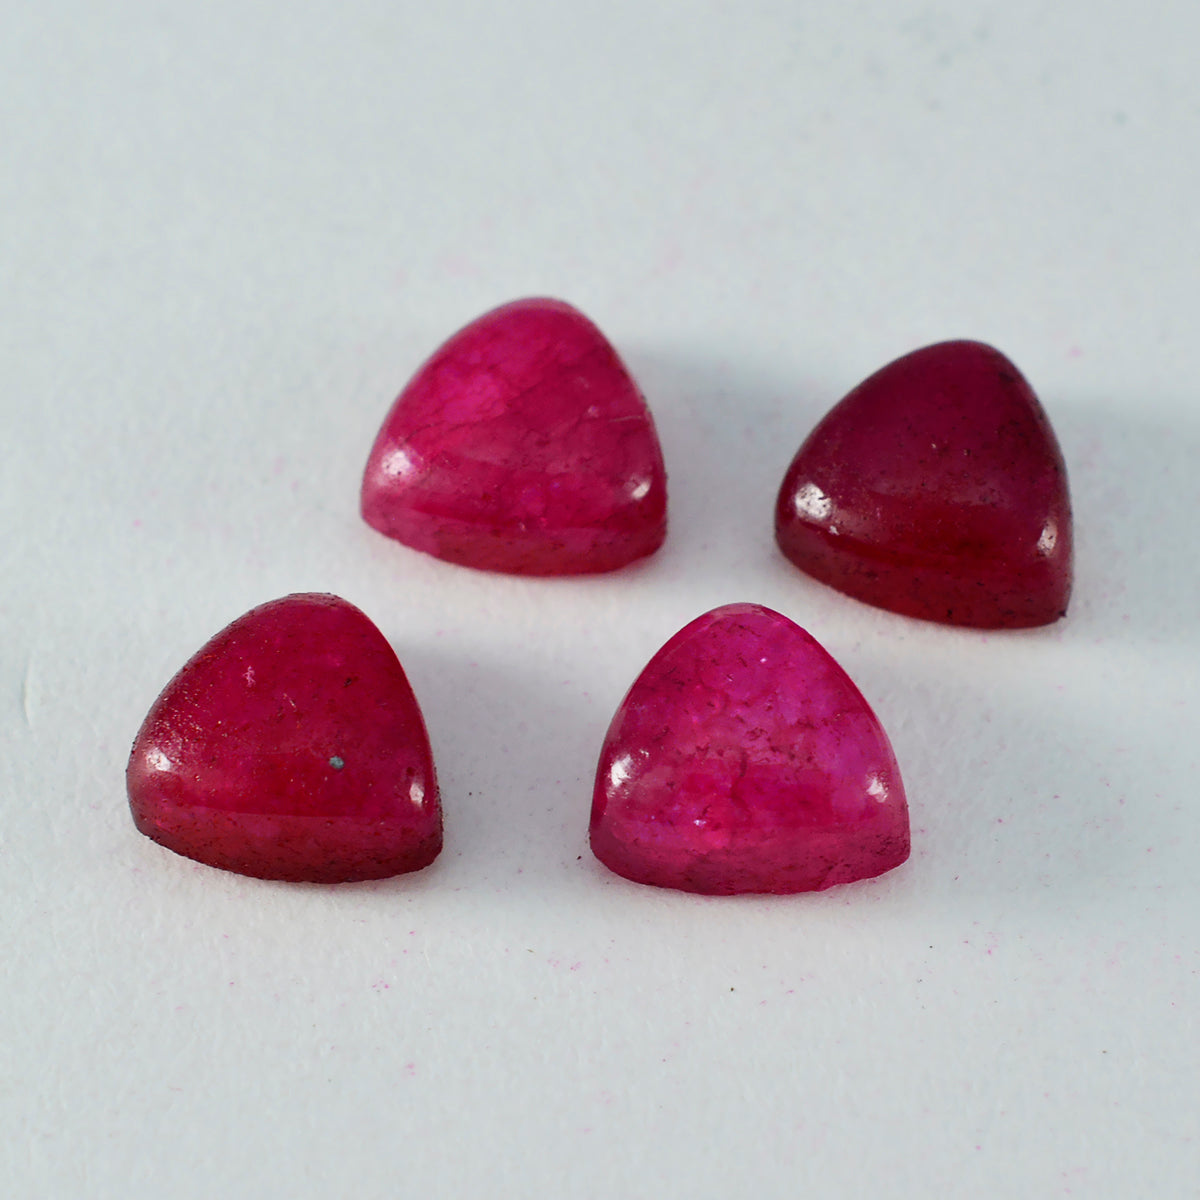 Riyogems 1PC Red Jasper Cabochon 7x7 mm Trillion Shape pretty Quality Loose Stone